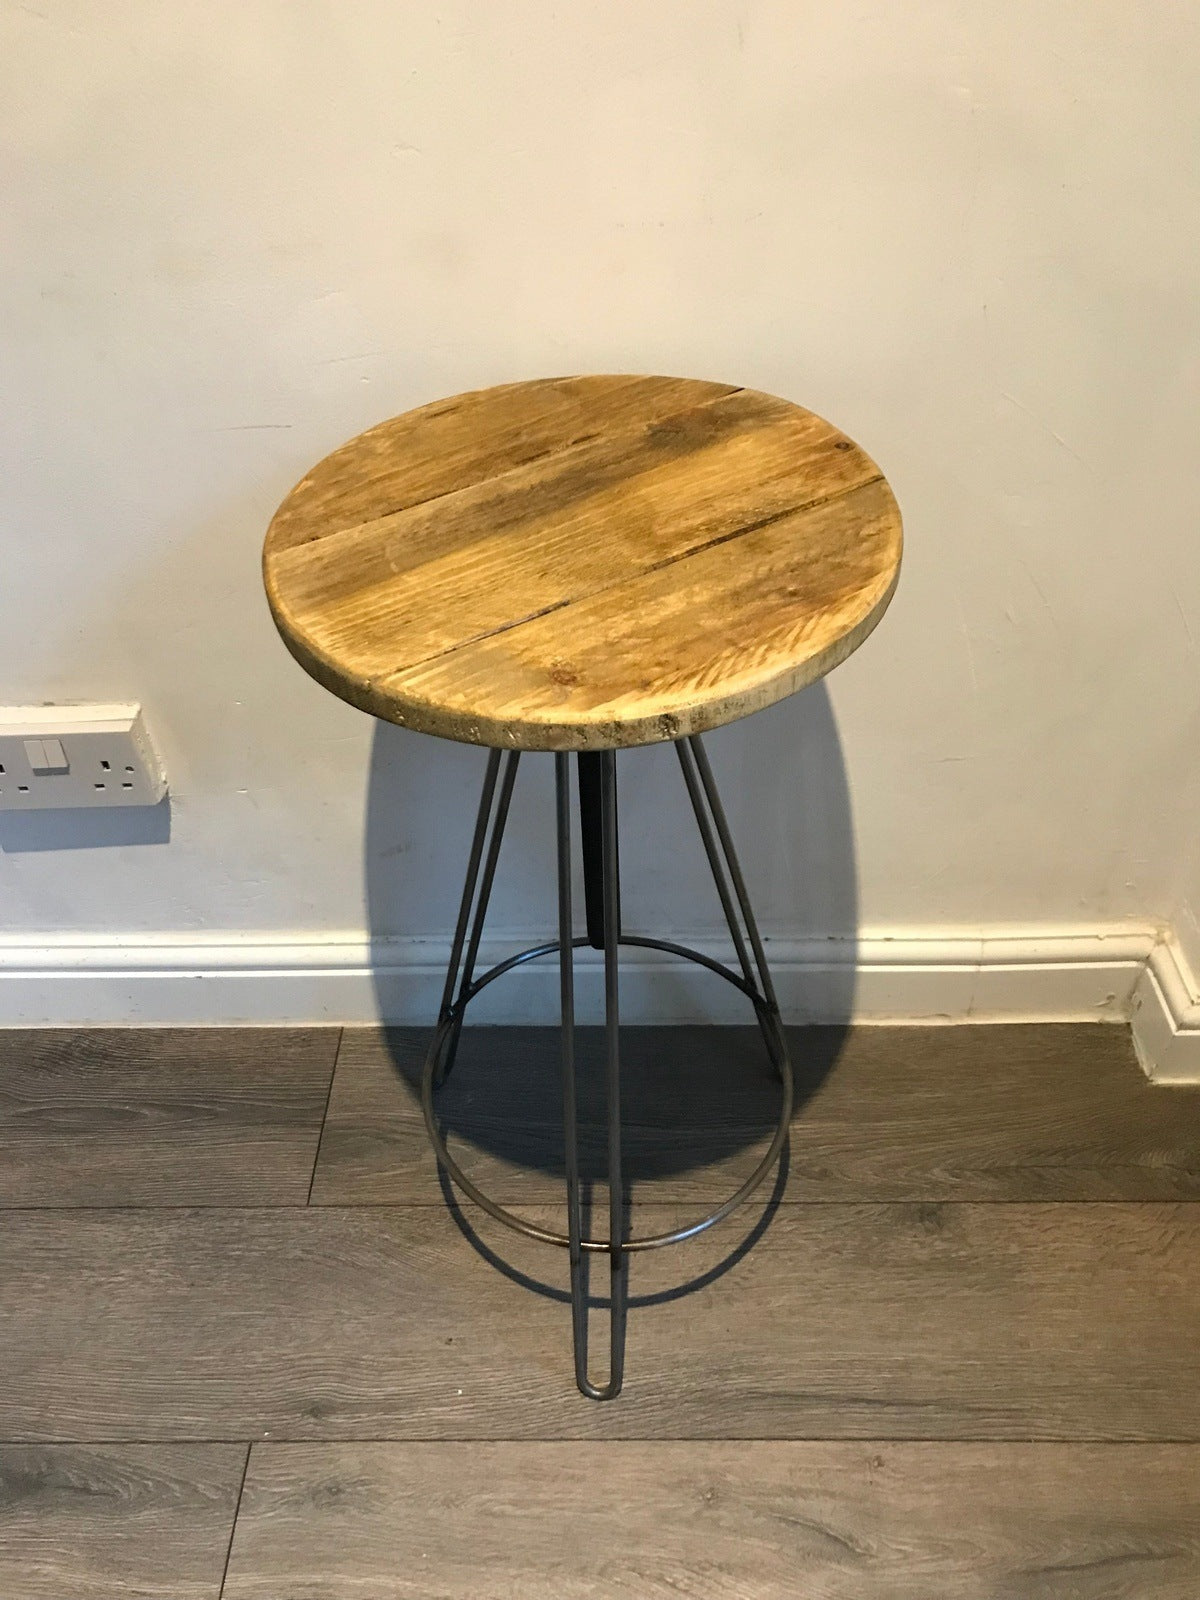 Adjustable Bar stool-hair pin legs-5 wood finishes - Industrial Breakfast stool - rustic stool